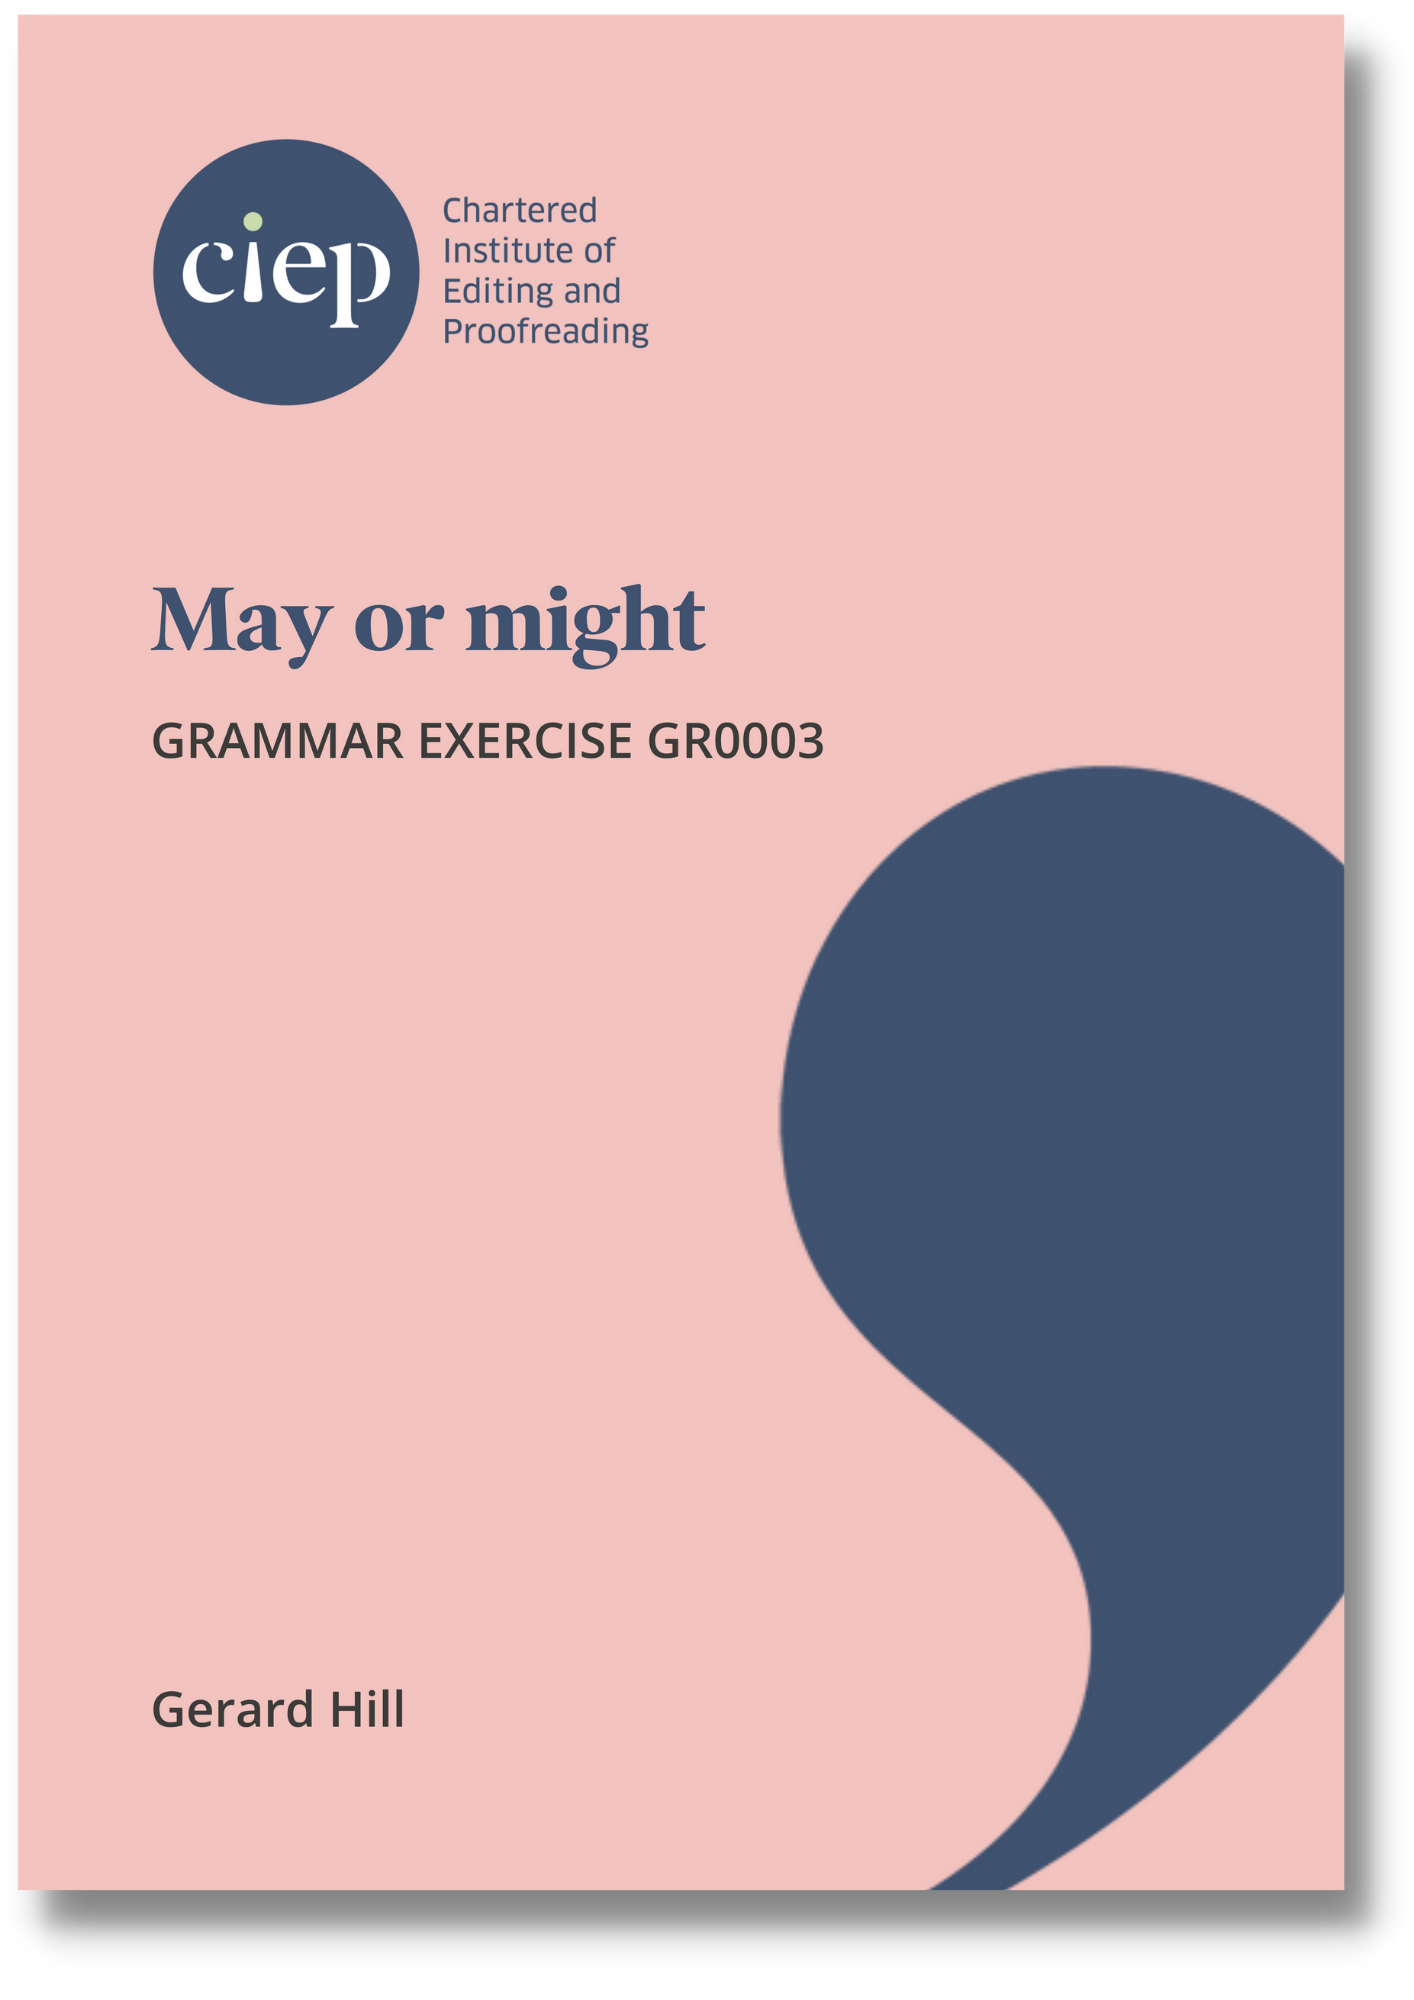 Grammar Exercise GR0003